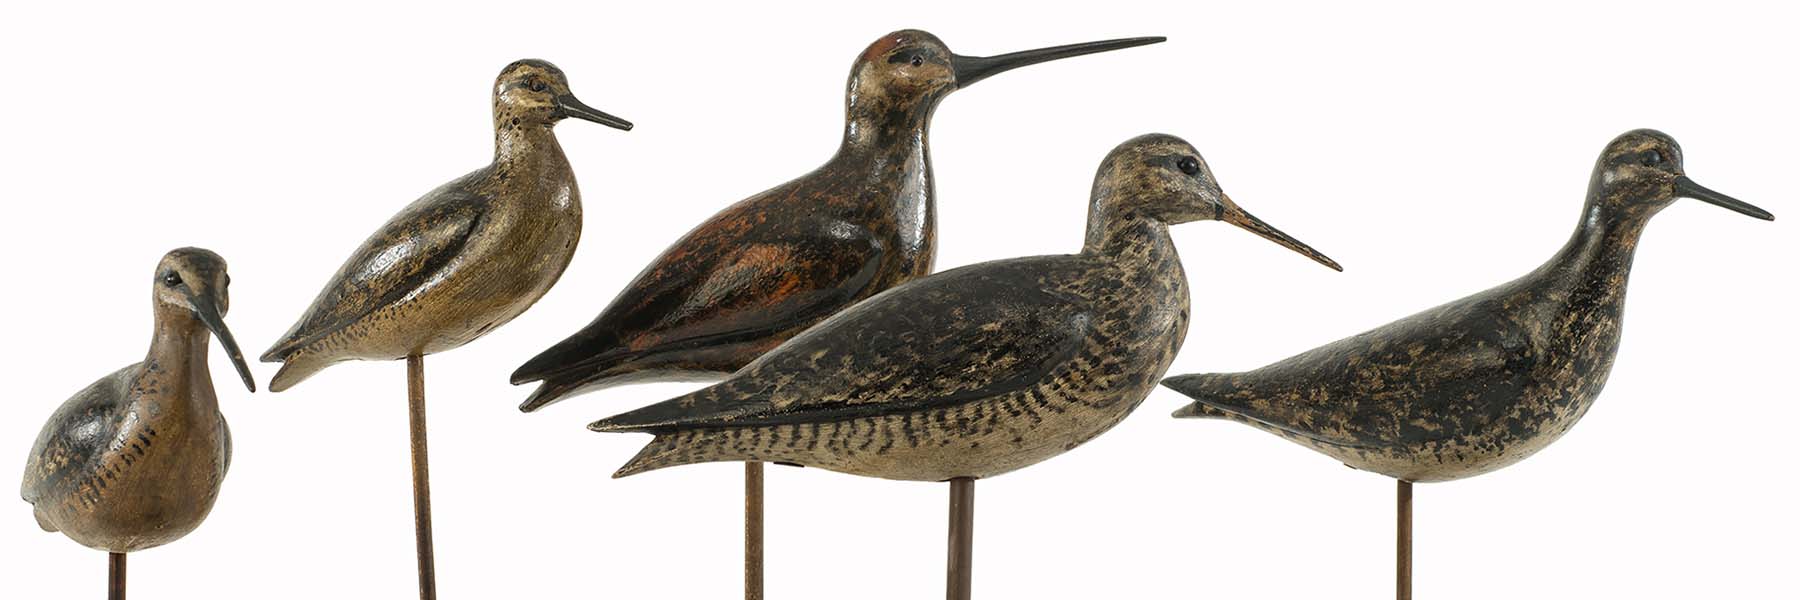 Shelburne Museum Reattributes Shorebird Decoys to Native American Carver Charles Sumner Bunn